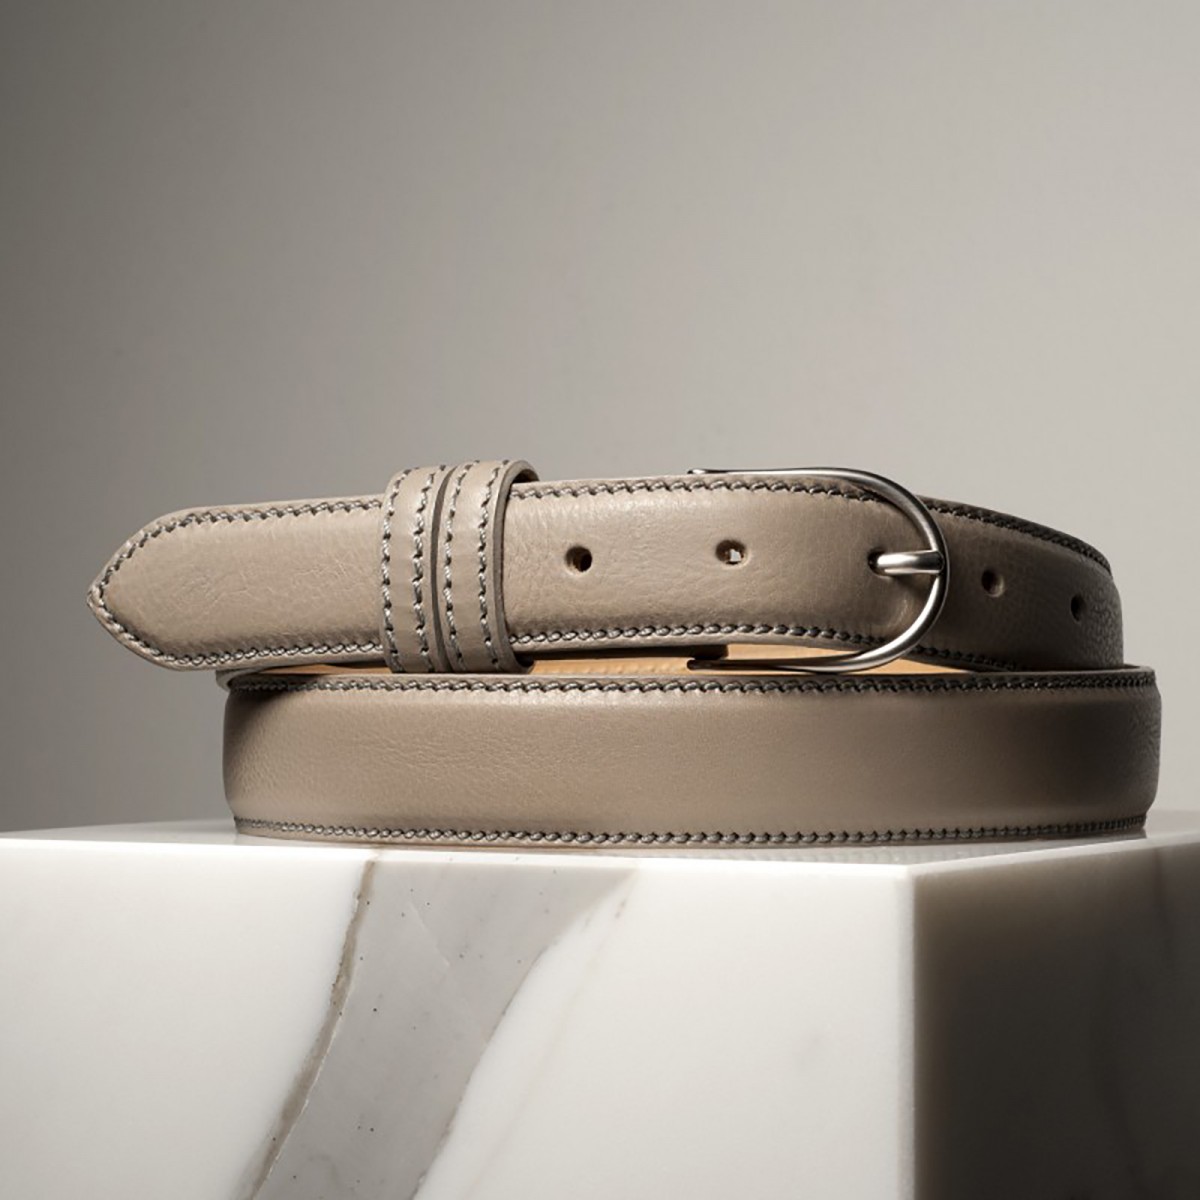 VOLANATO CALFSKIN - Leather belt, handmade in Italy